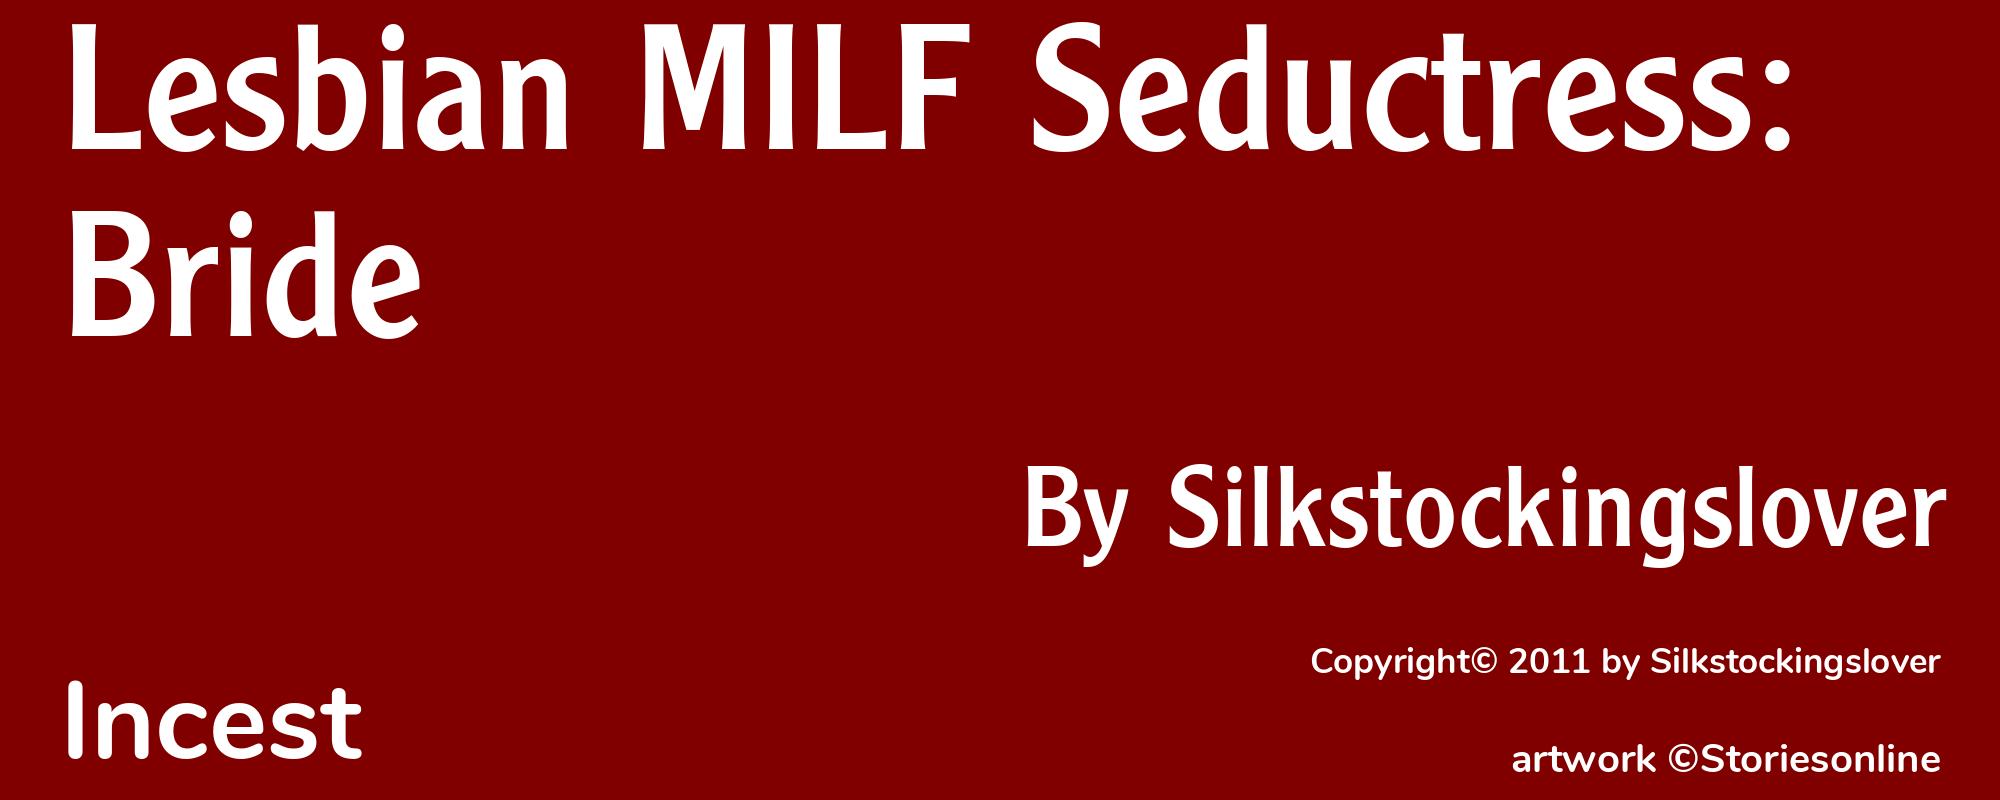 Lesbian MILF Seductress: Bride - Cover